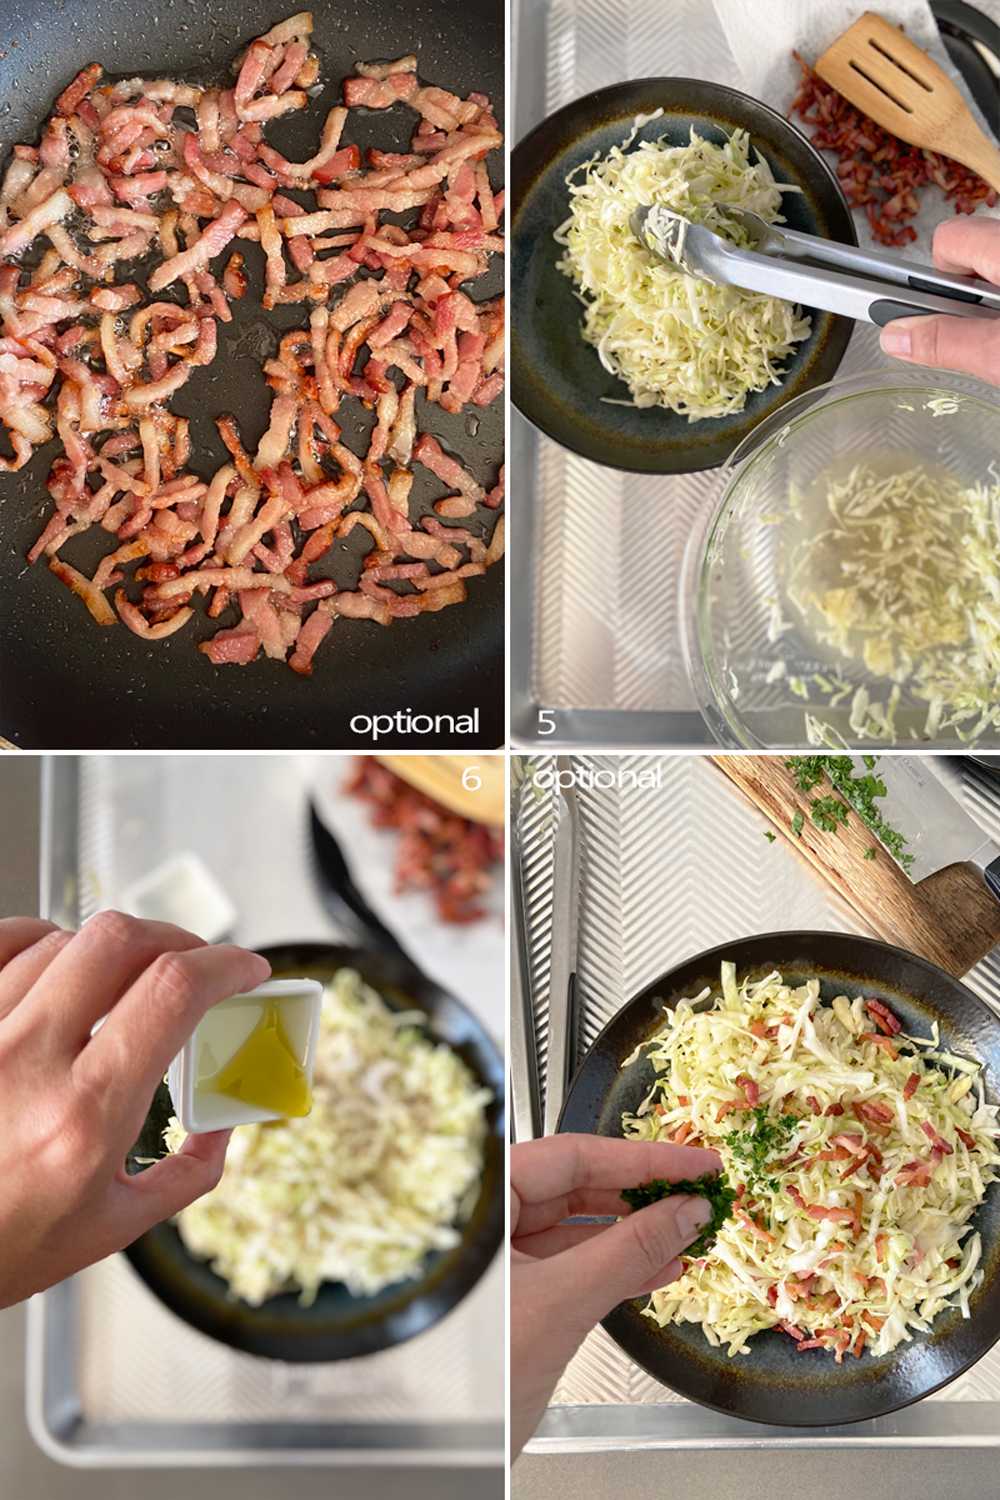 How to make German coleslaw (part 2)